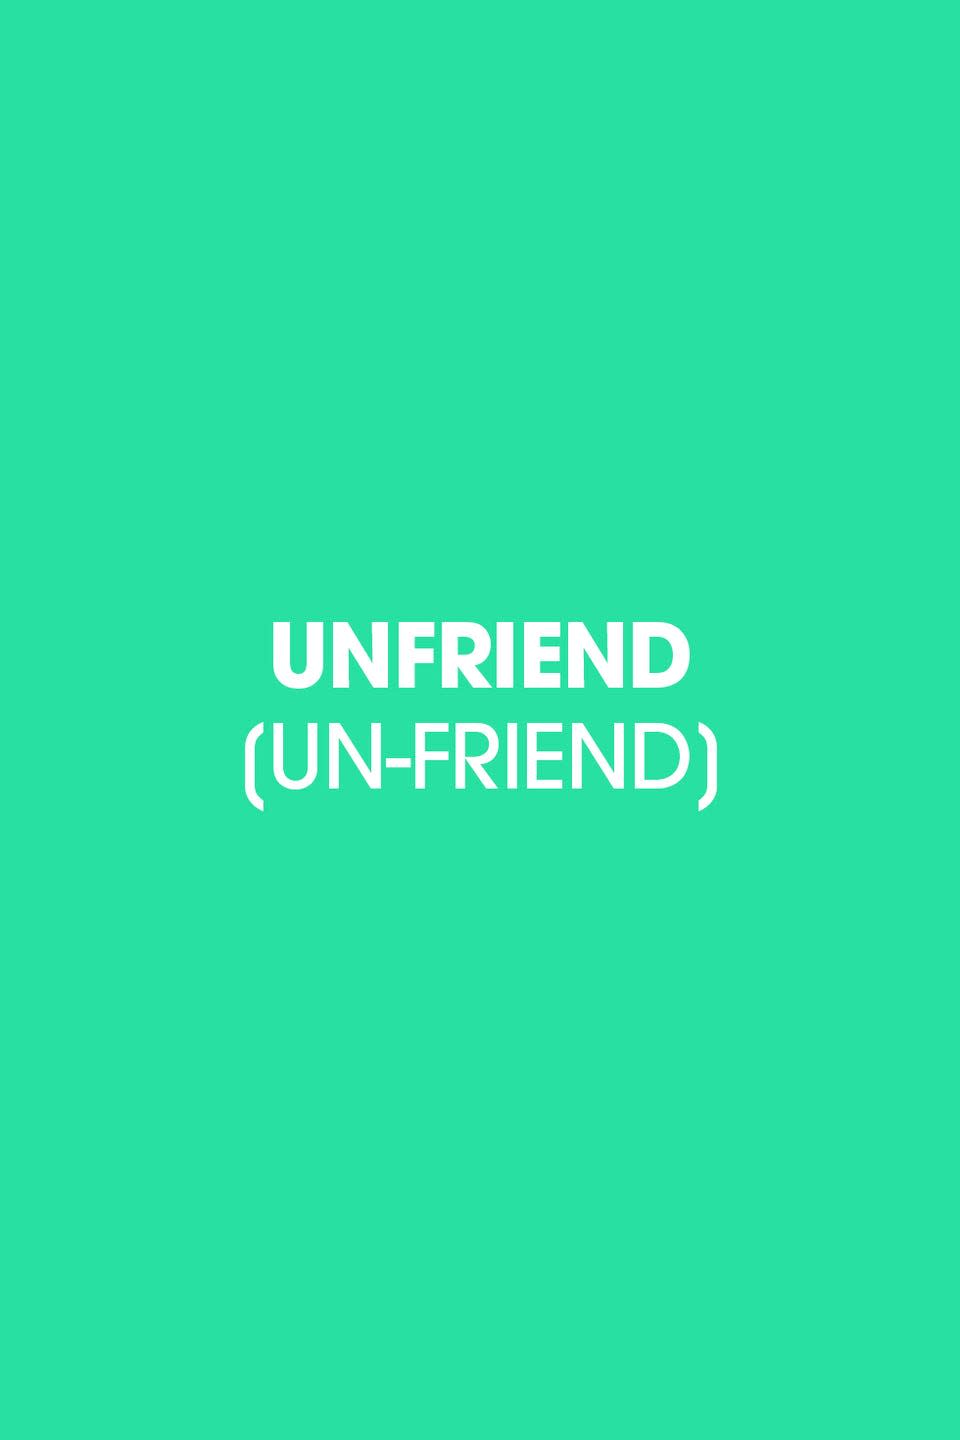 2003: Unfriend